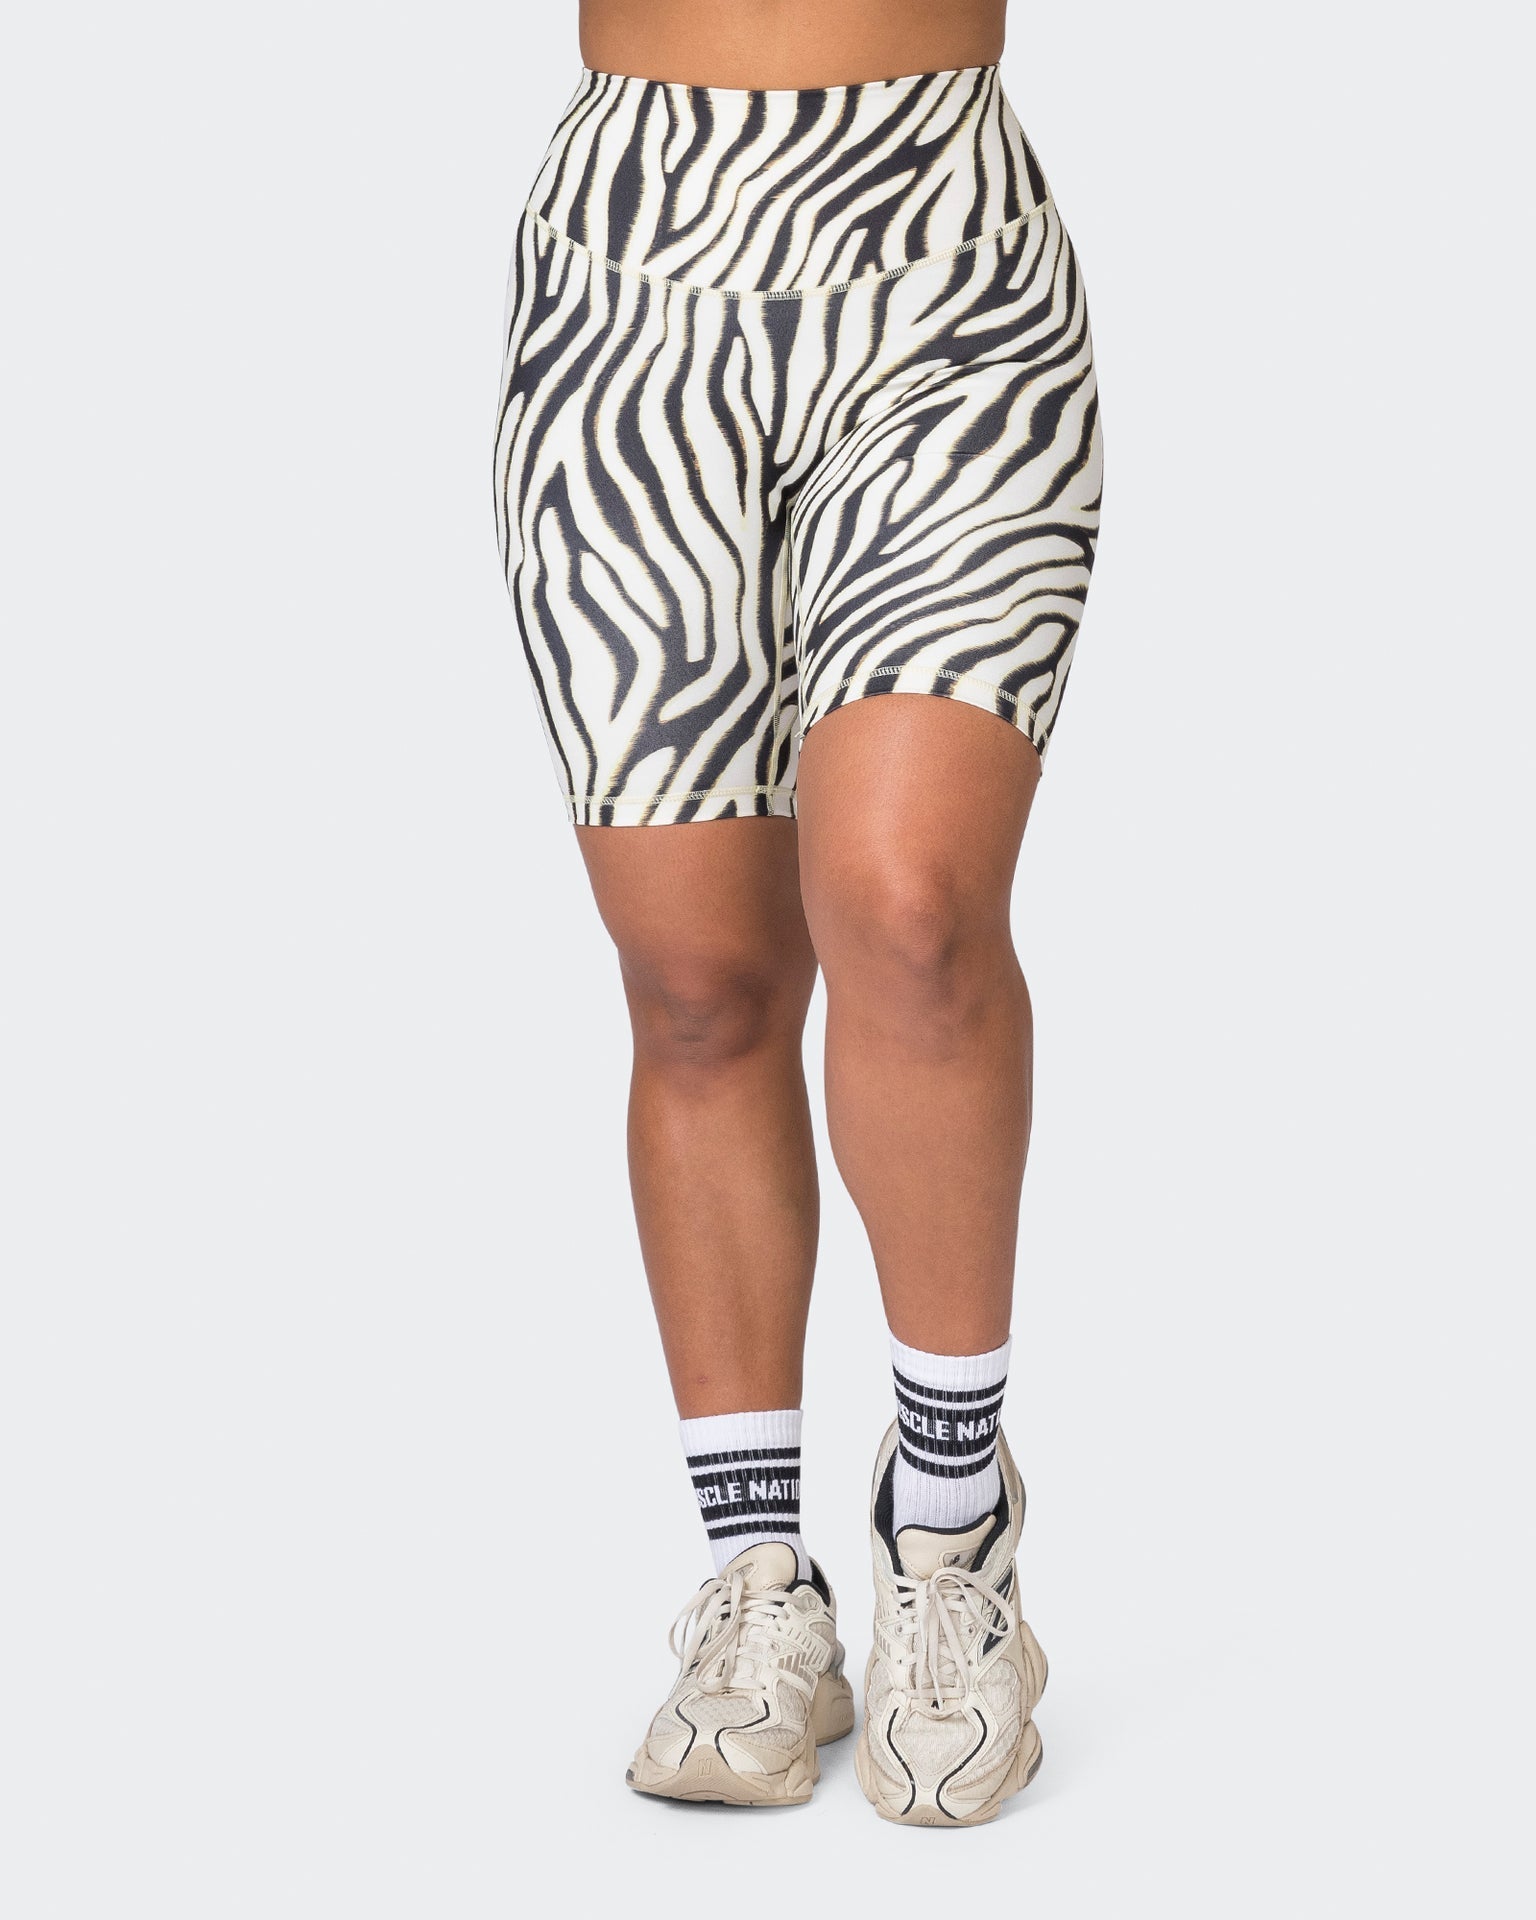 Muscle Nation Shorts Ultra Everyday Referee Length Shorts - Zebra Print